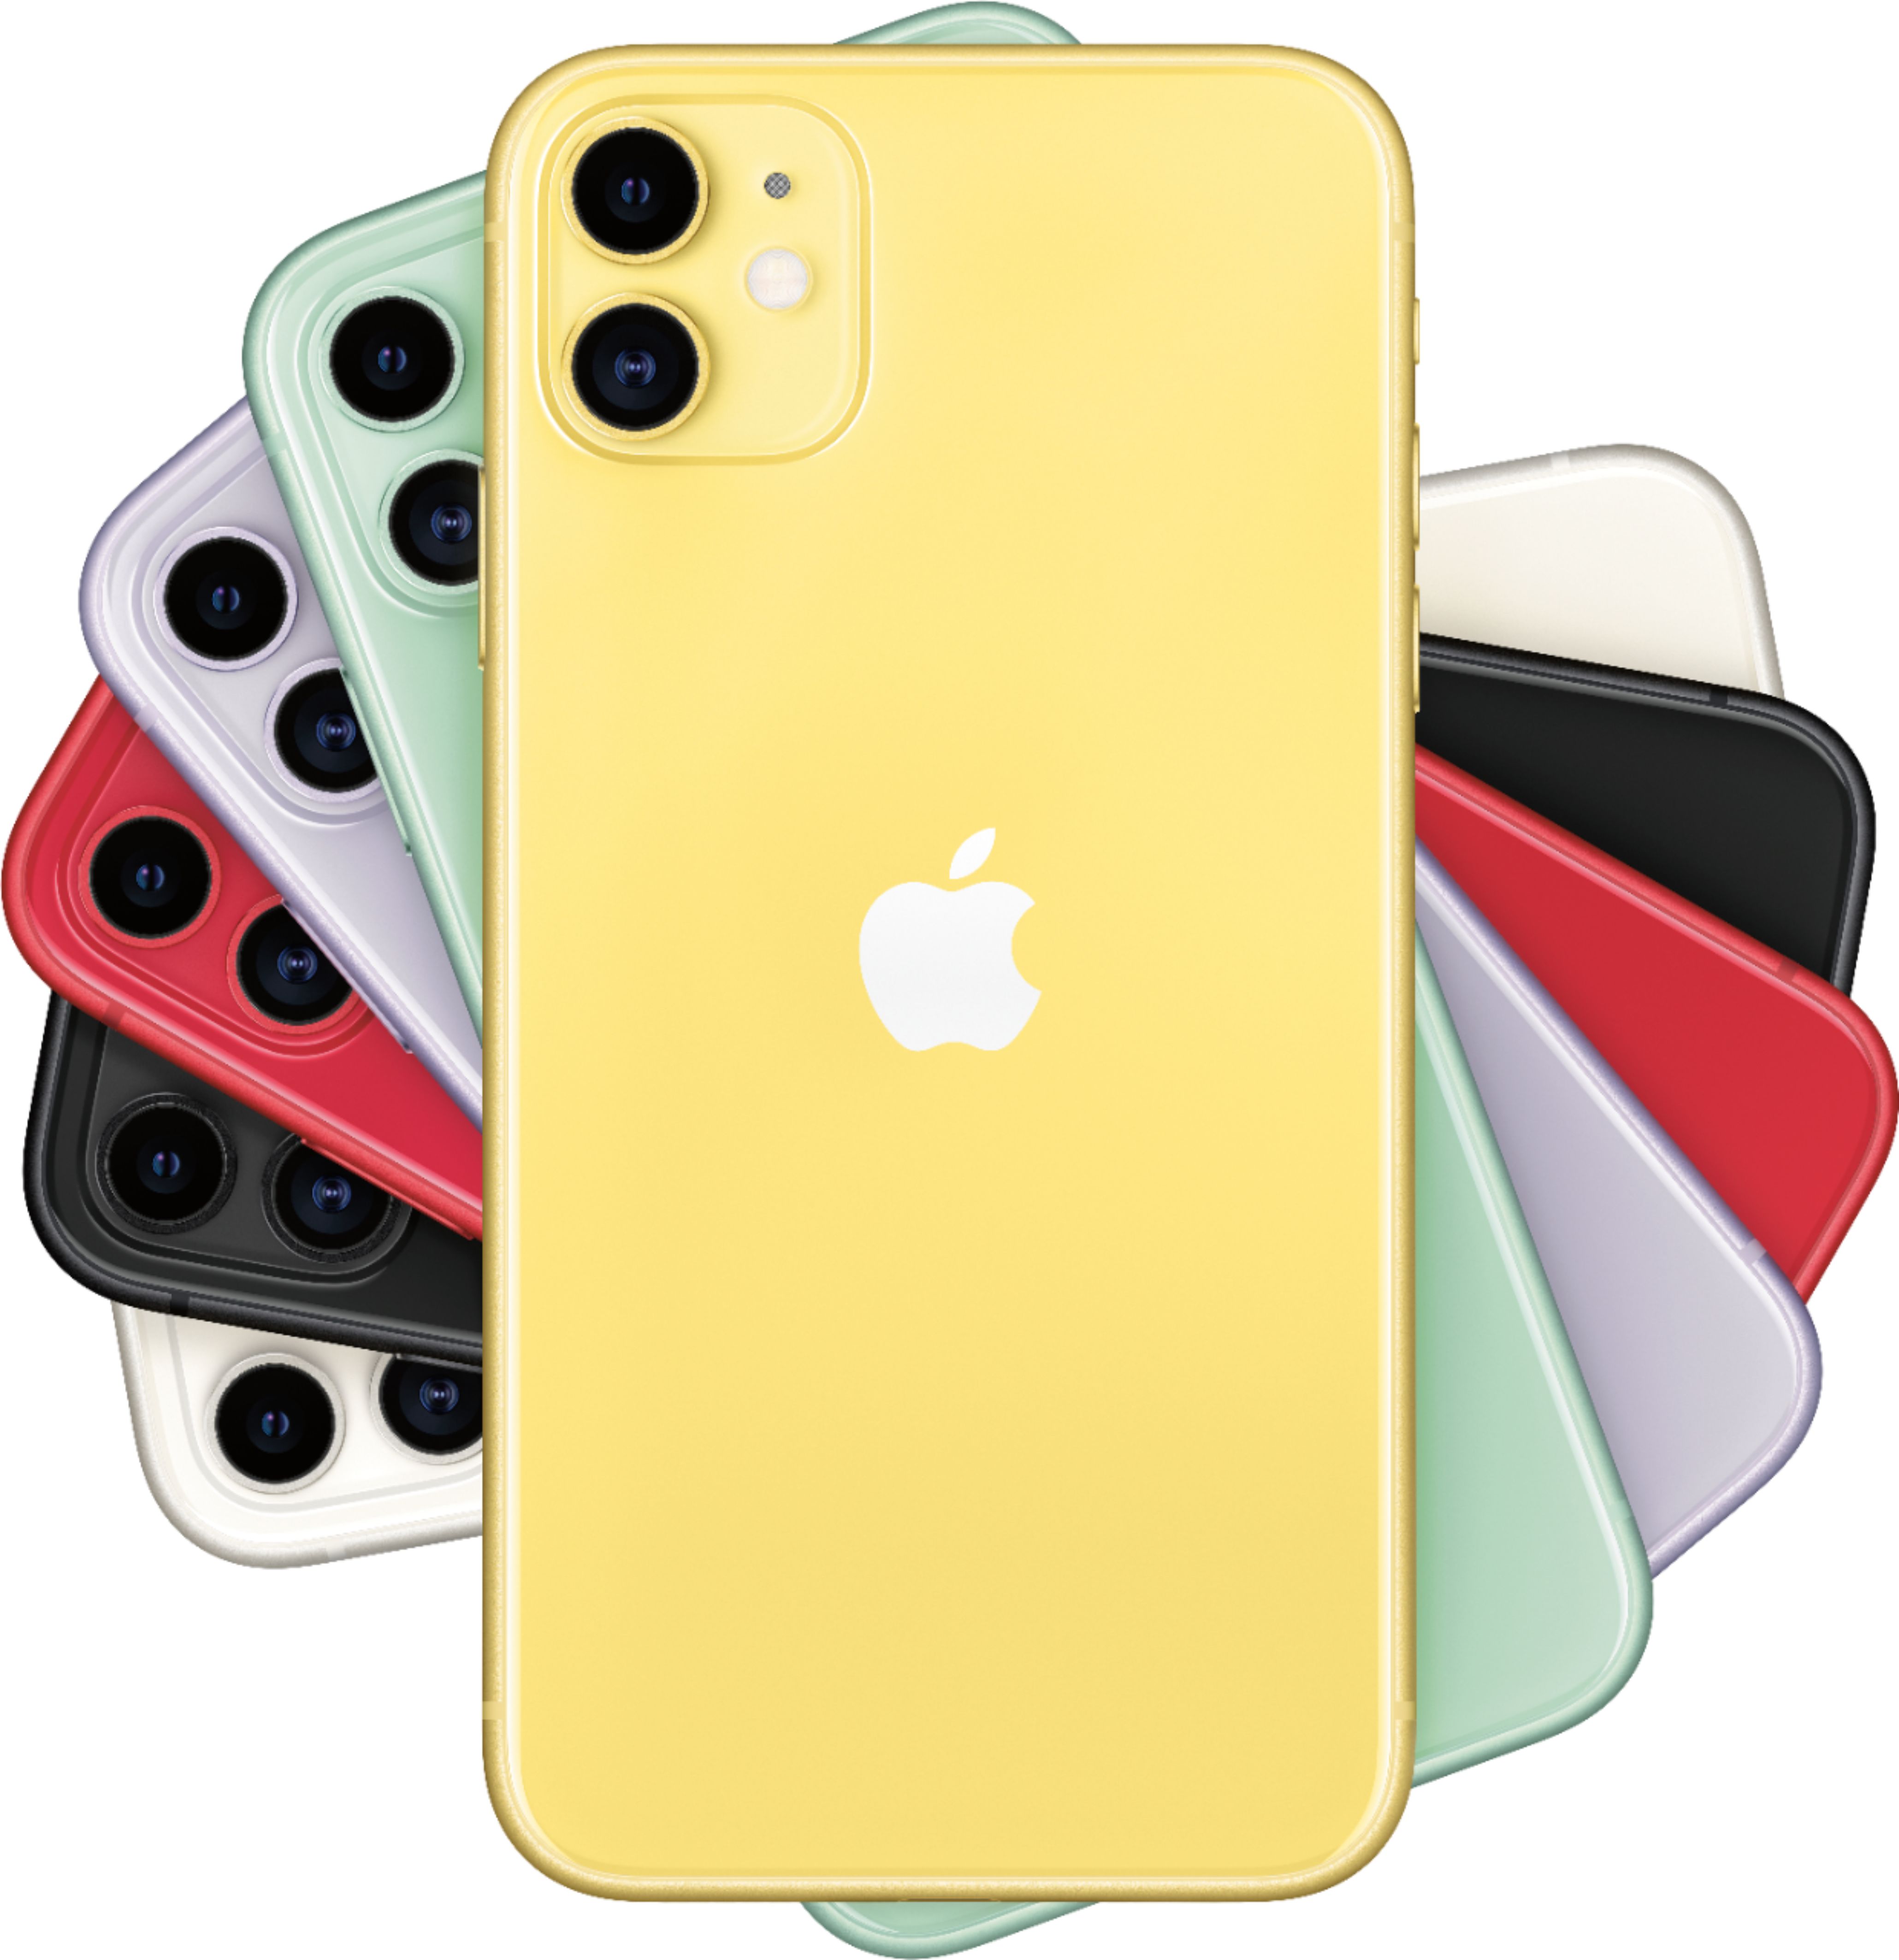 Apple iPhone 11 64GB Yellow (Sprint) MWLA2LL/A - Best Buy